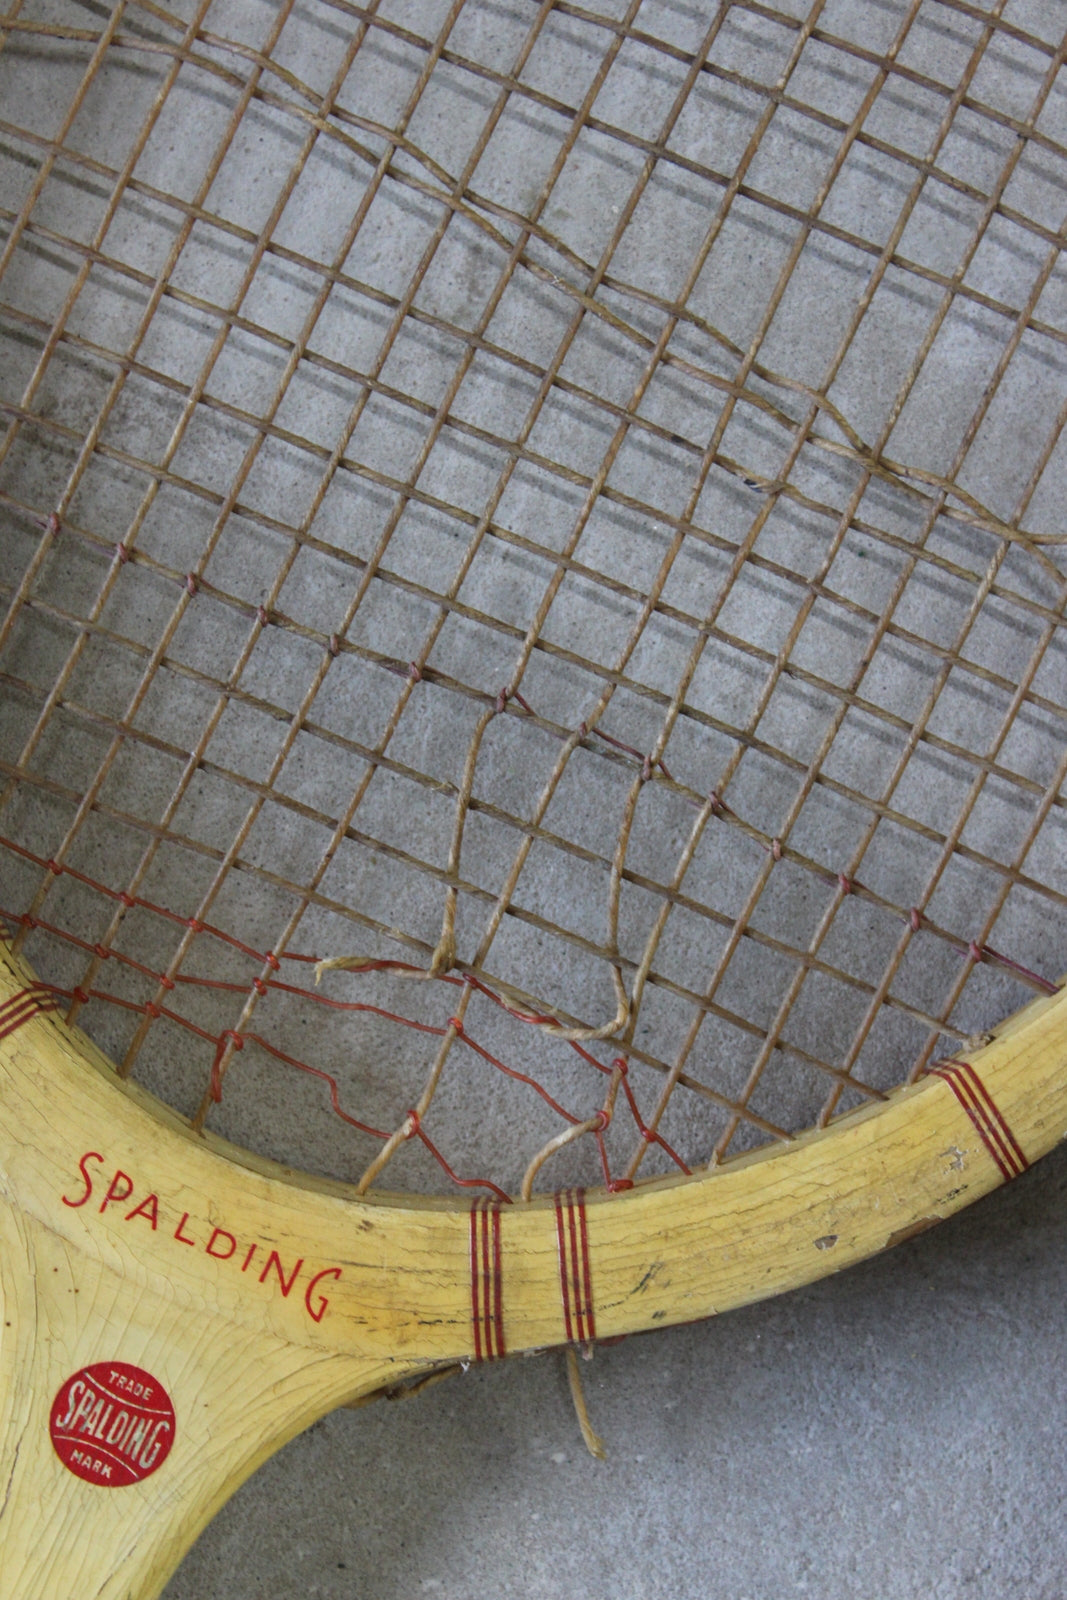 Pair Vintage Wooden Tennis Rackets - Kernow Furniture